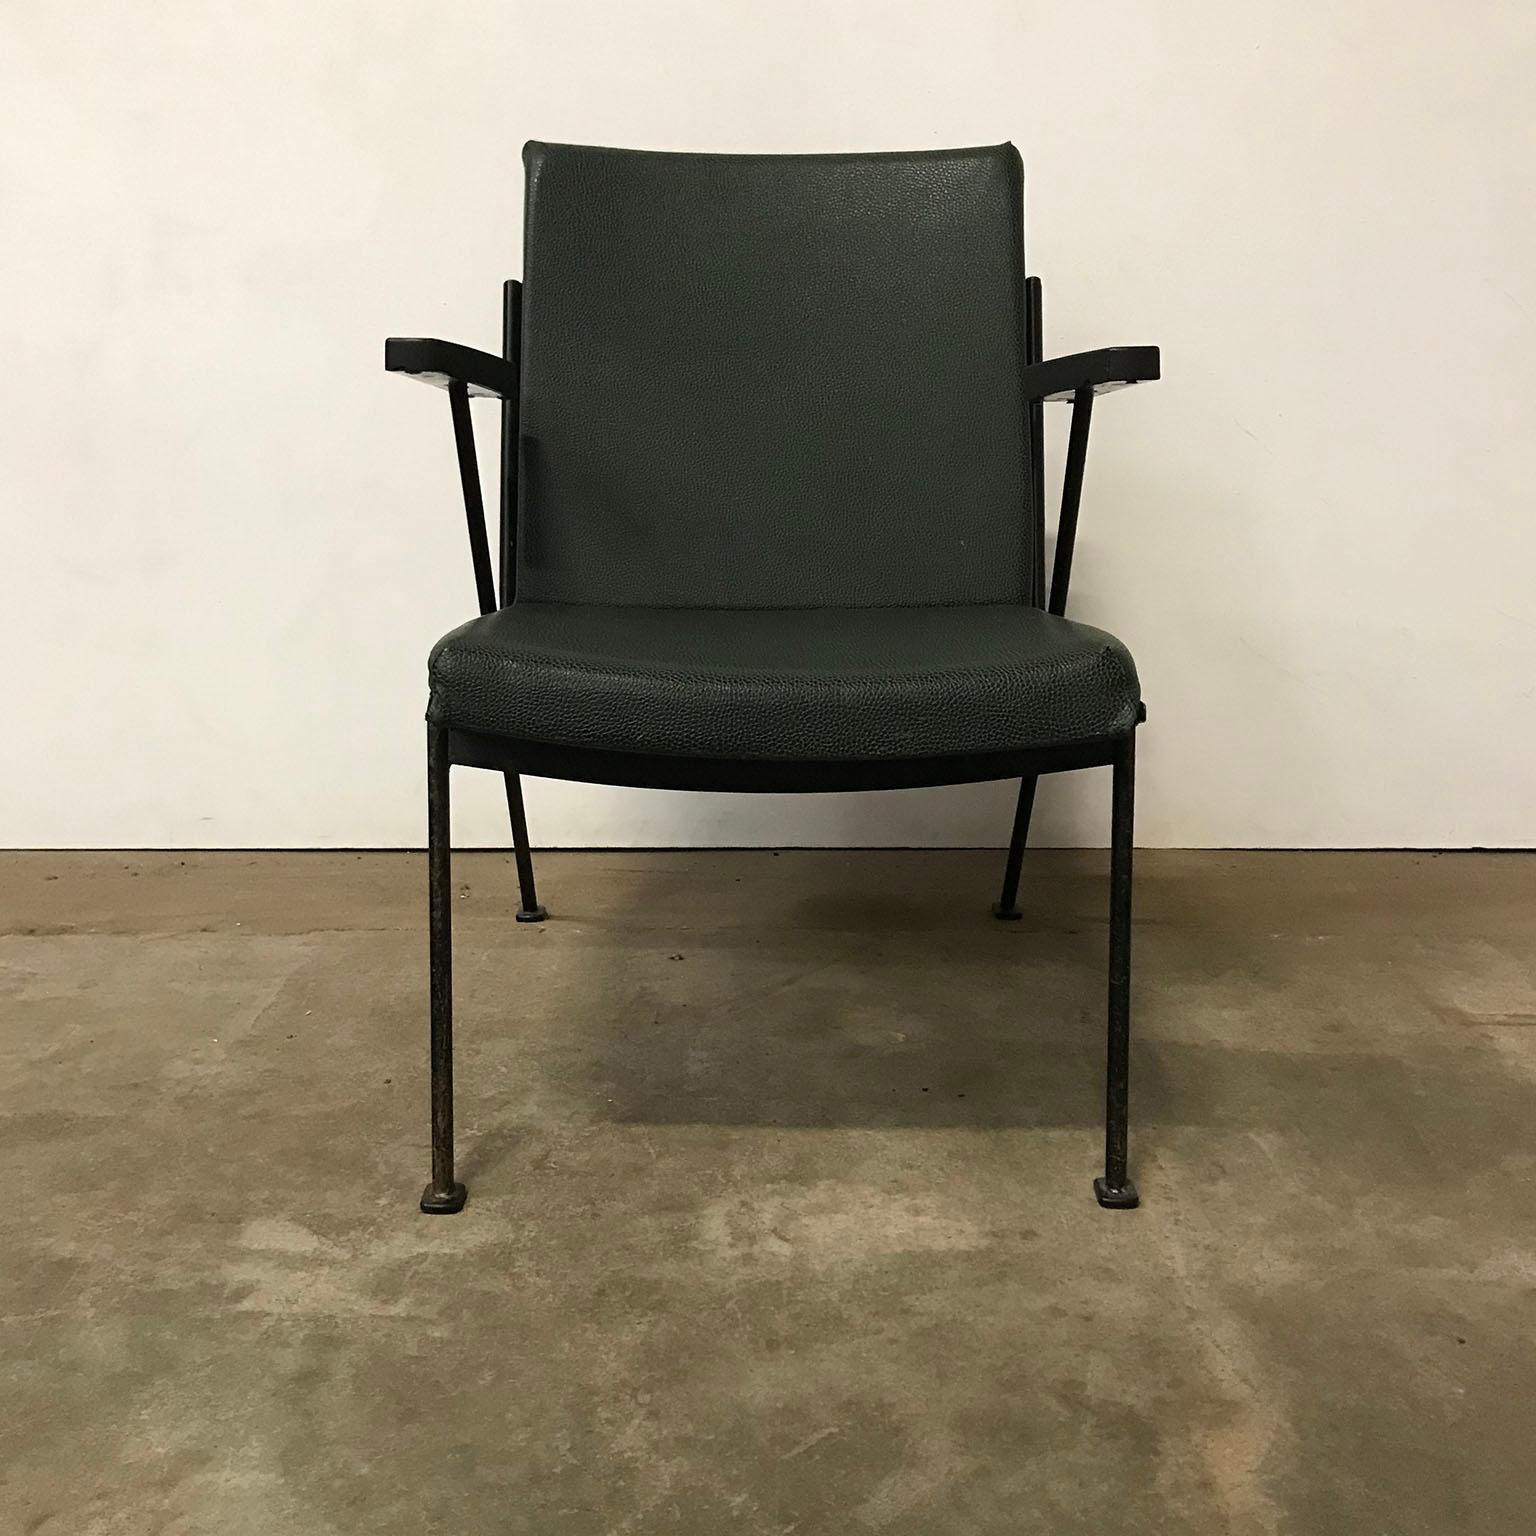 1959, Wim Rietveld for Ahrend de Cirkel, Oase Chair Original Green Leatherette  For Sale 1